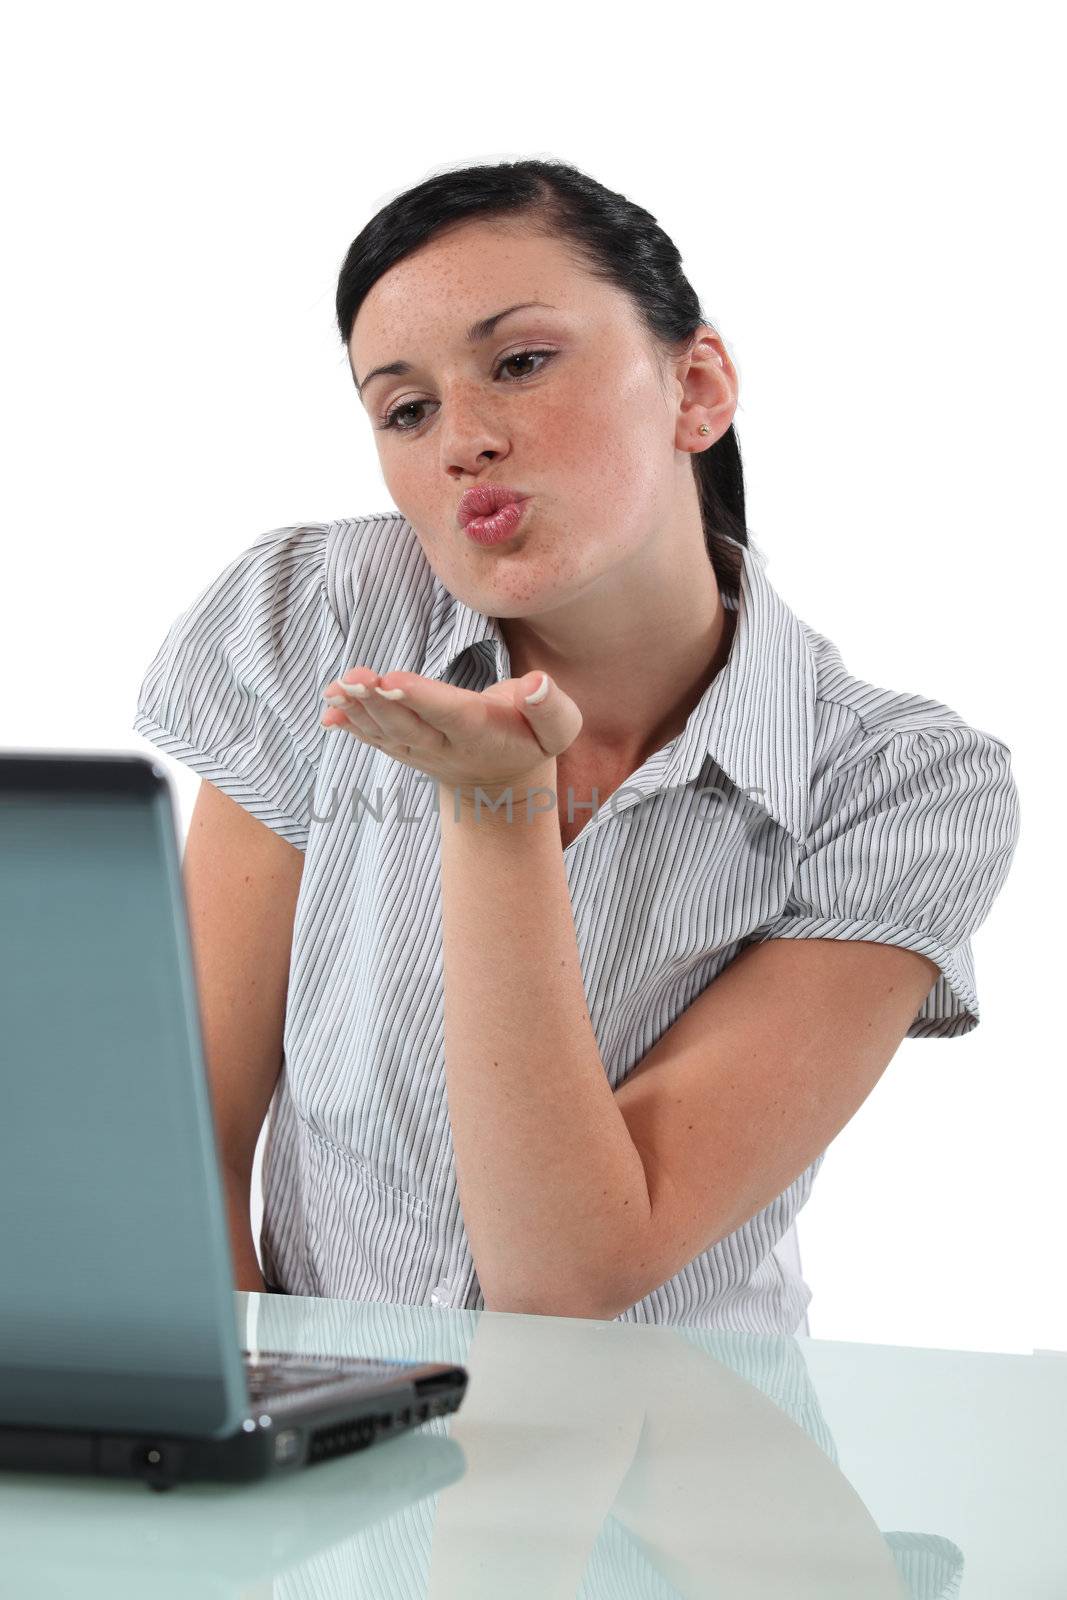 Young woman sending kisses through webcam